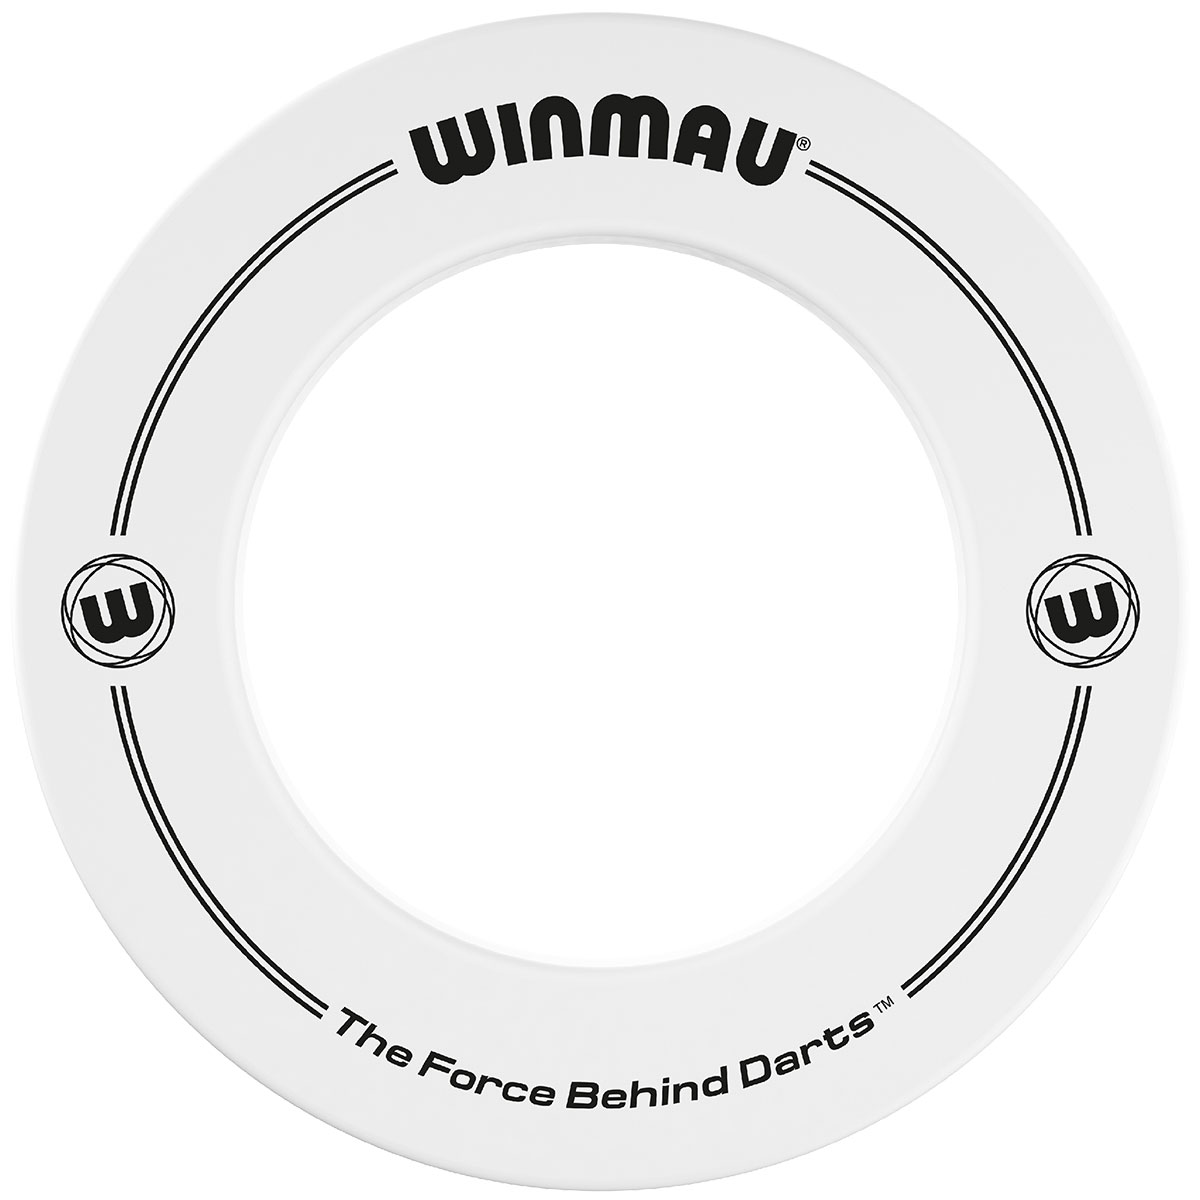 Winmau White Rubber Dartboard Surround - Printed